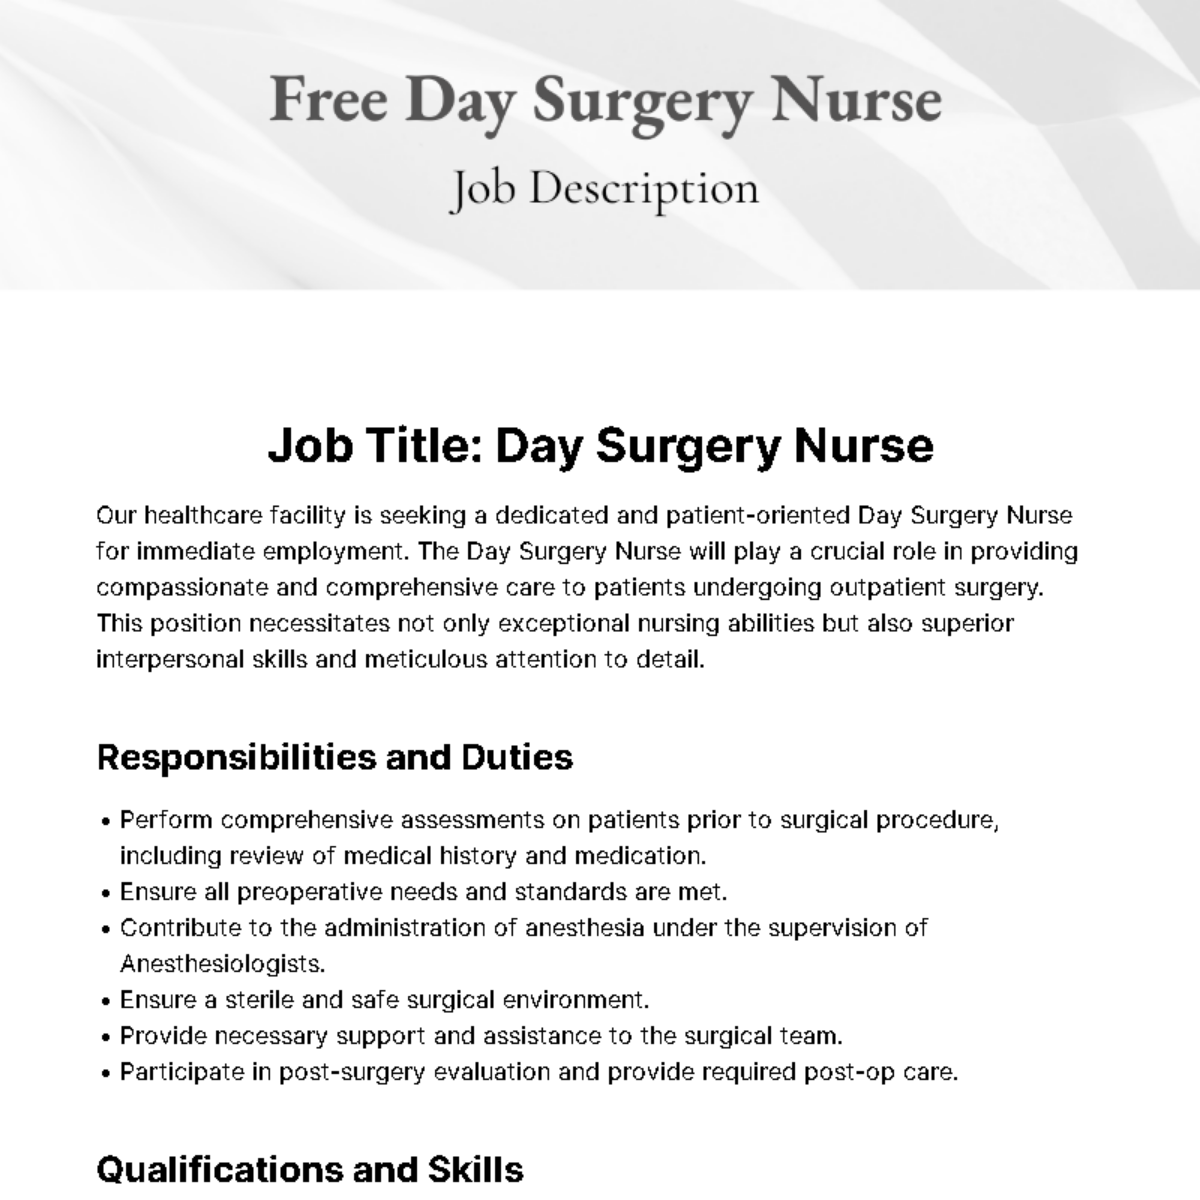 Free Day Surgery Nurse Job Description Template